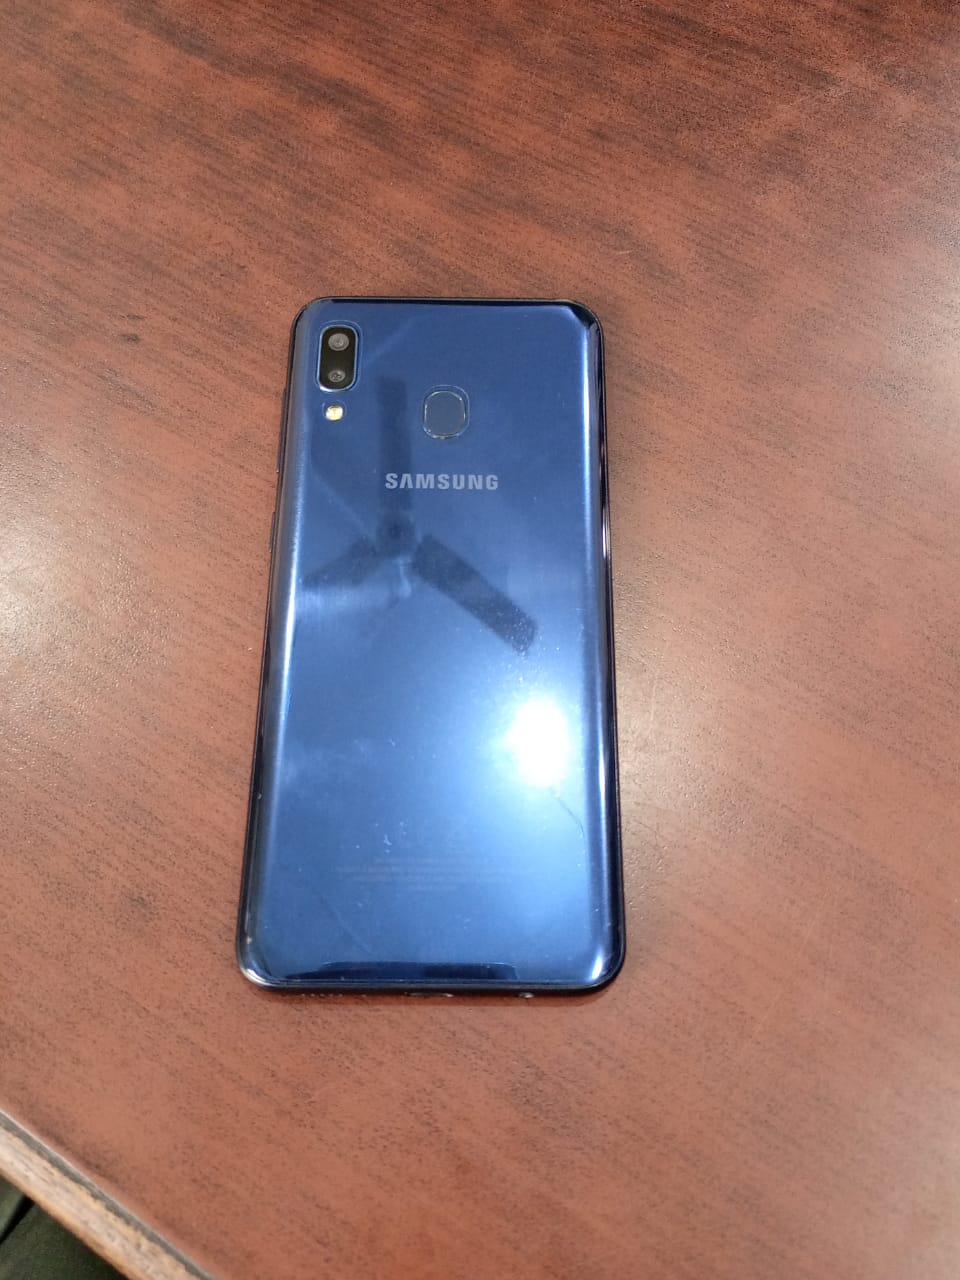 Samsung Galaxy good condition 10/10